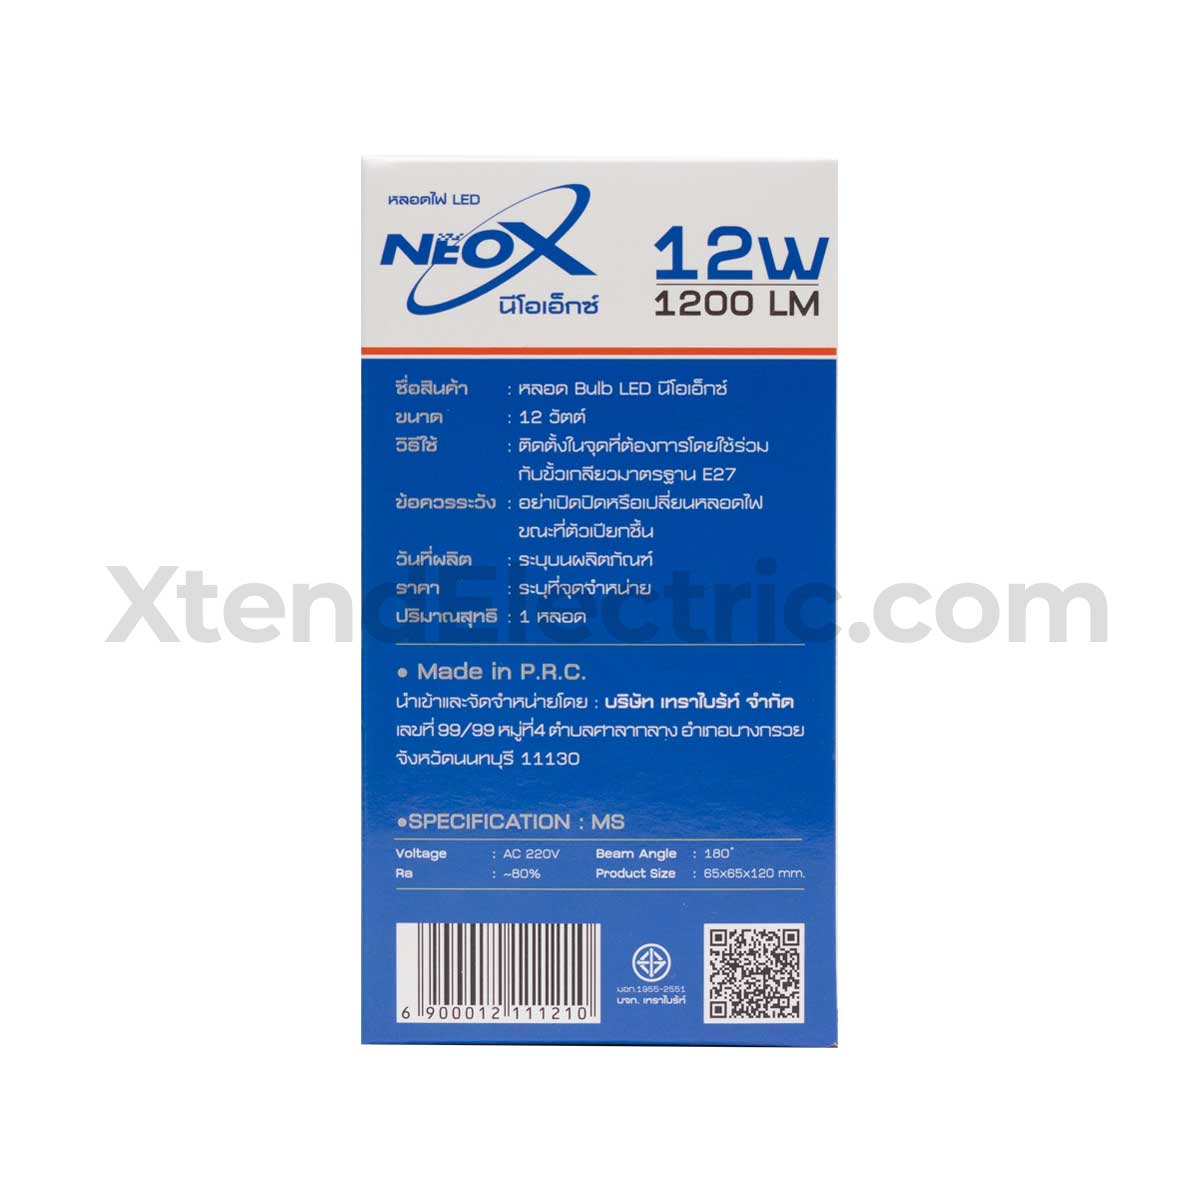 Neox-LED-12w-DL-03